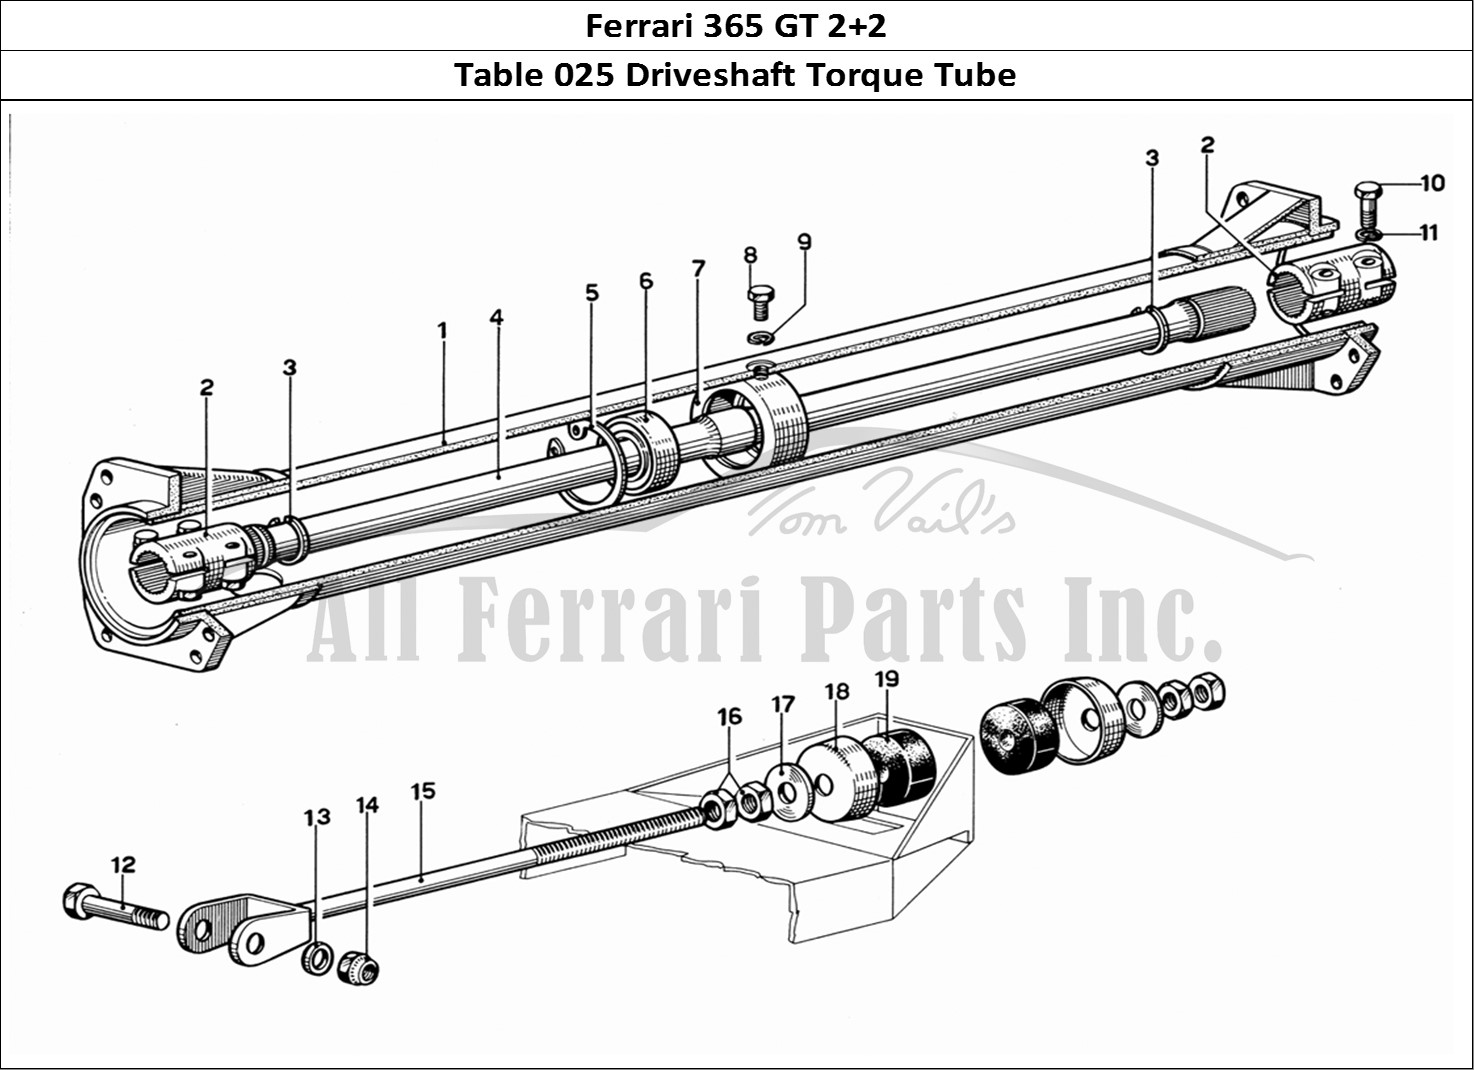 Ferrari Parts Ferrari 365 GT 2+2 (Mechanical) Page 025 Transmission Shaft